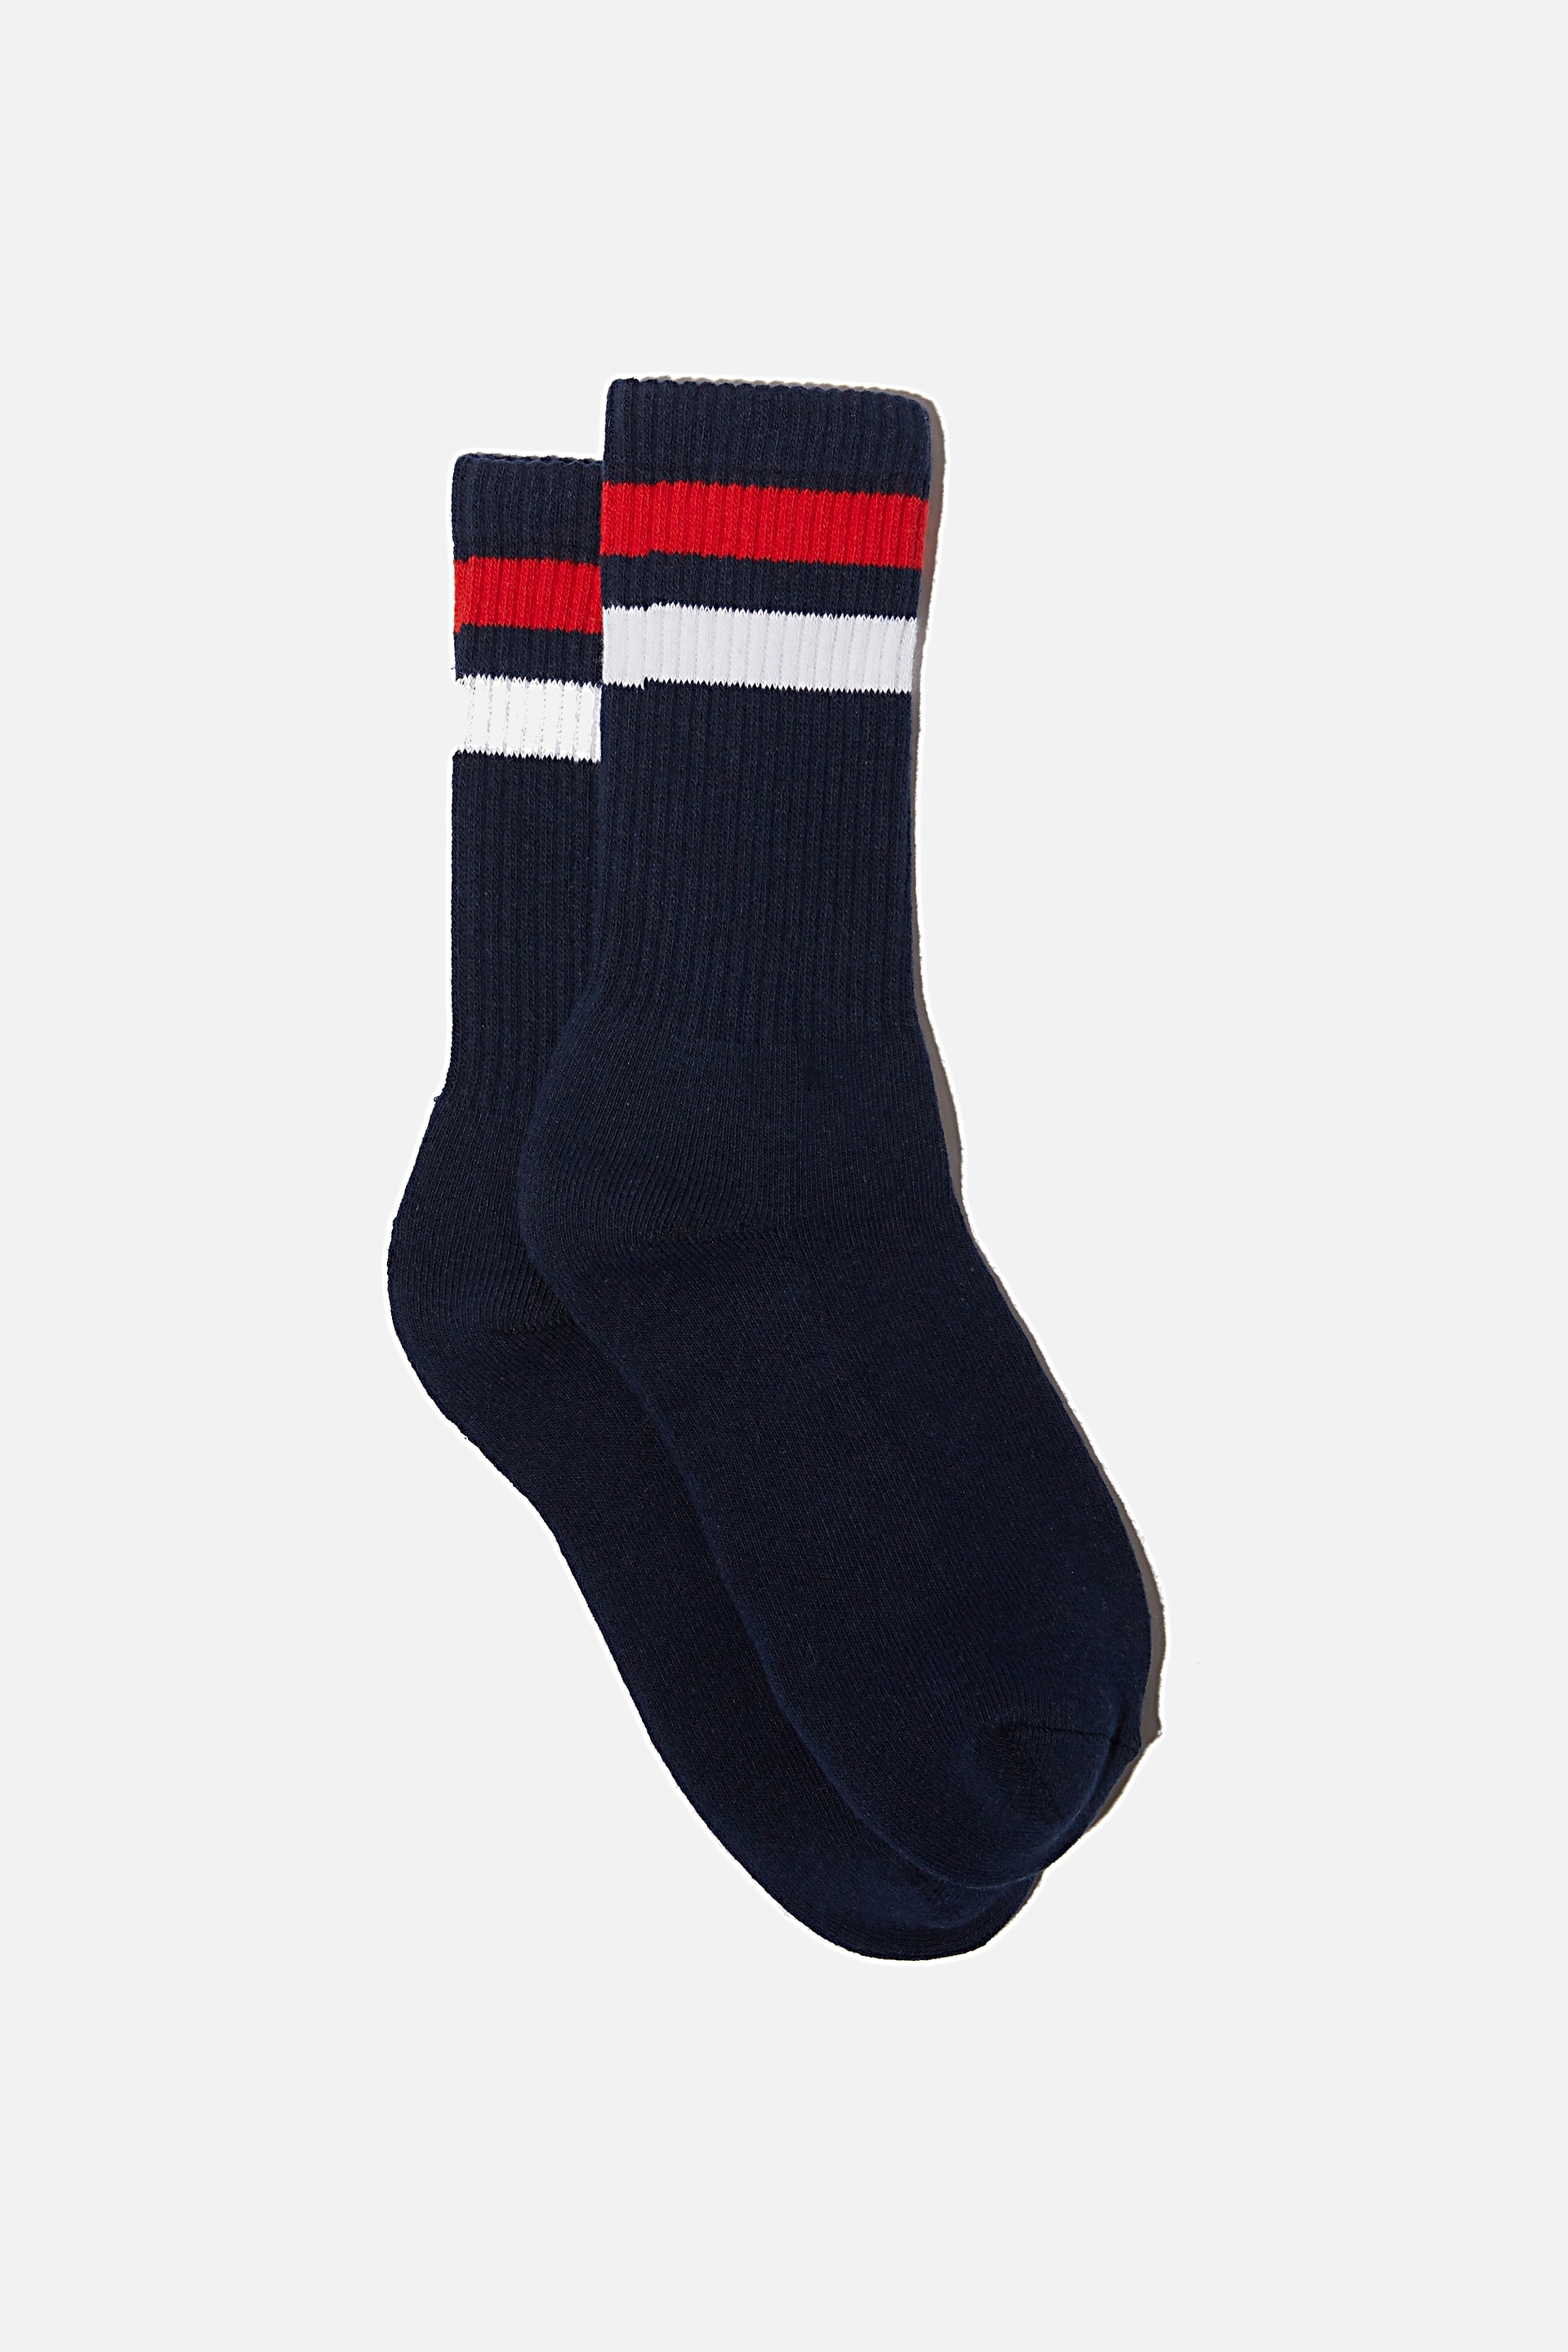 Cotton On Men - Essential Sock - Navy/red/white sport stripe